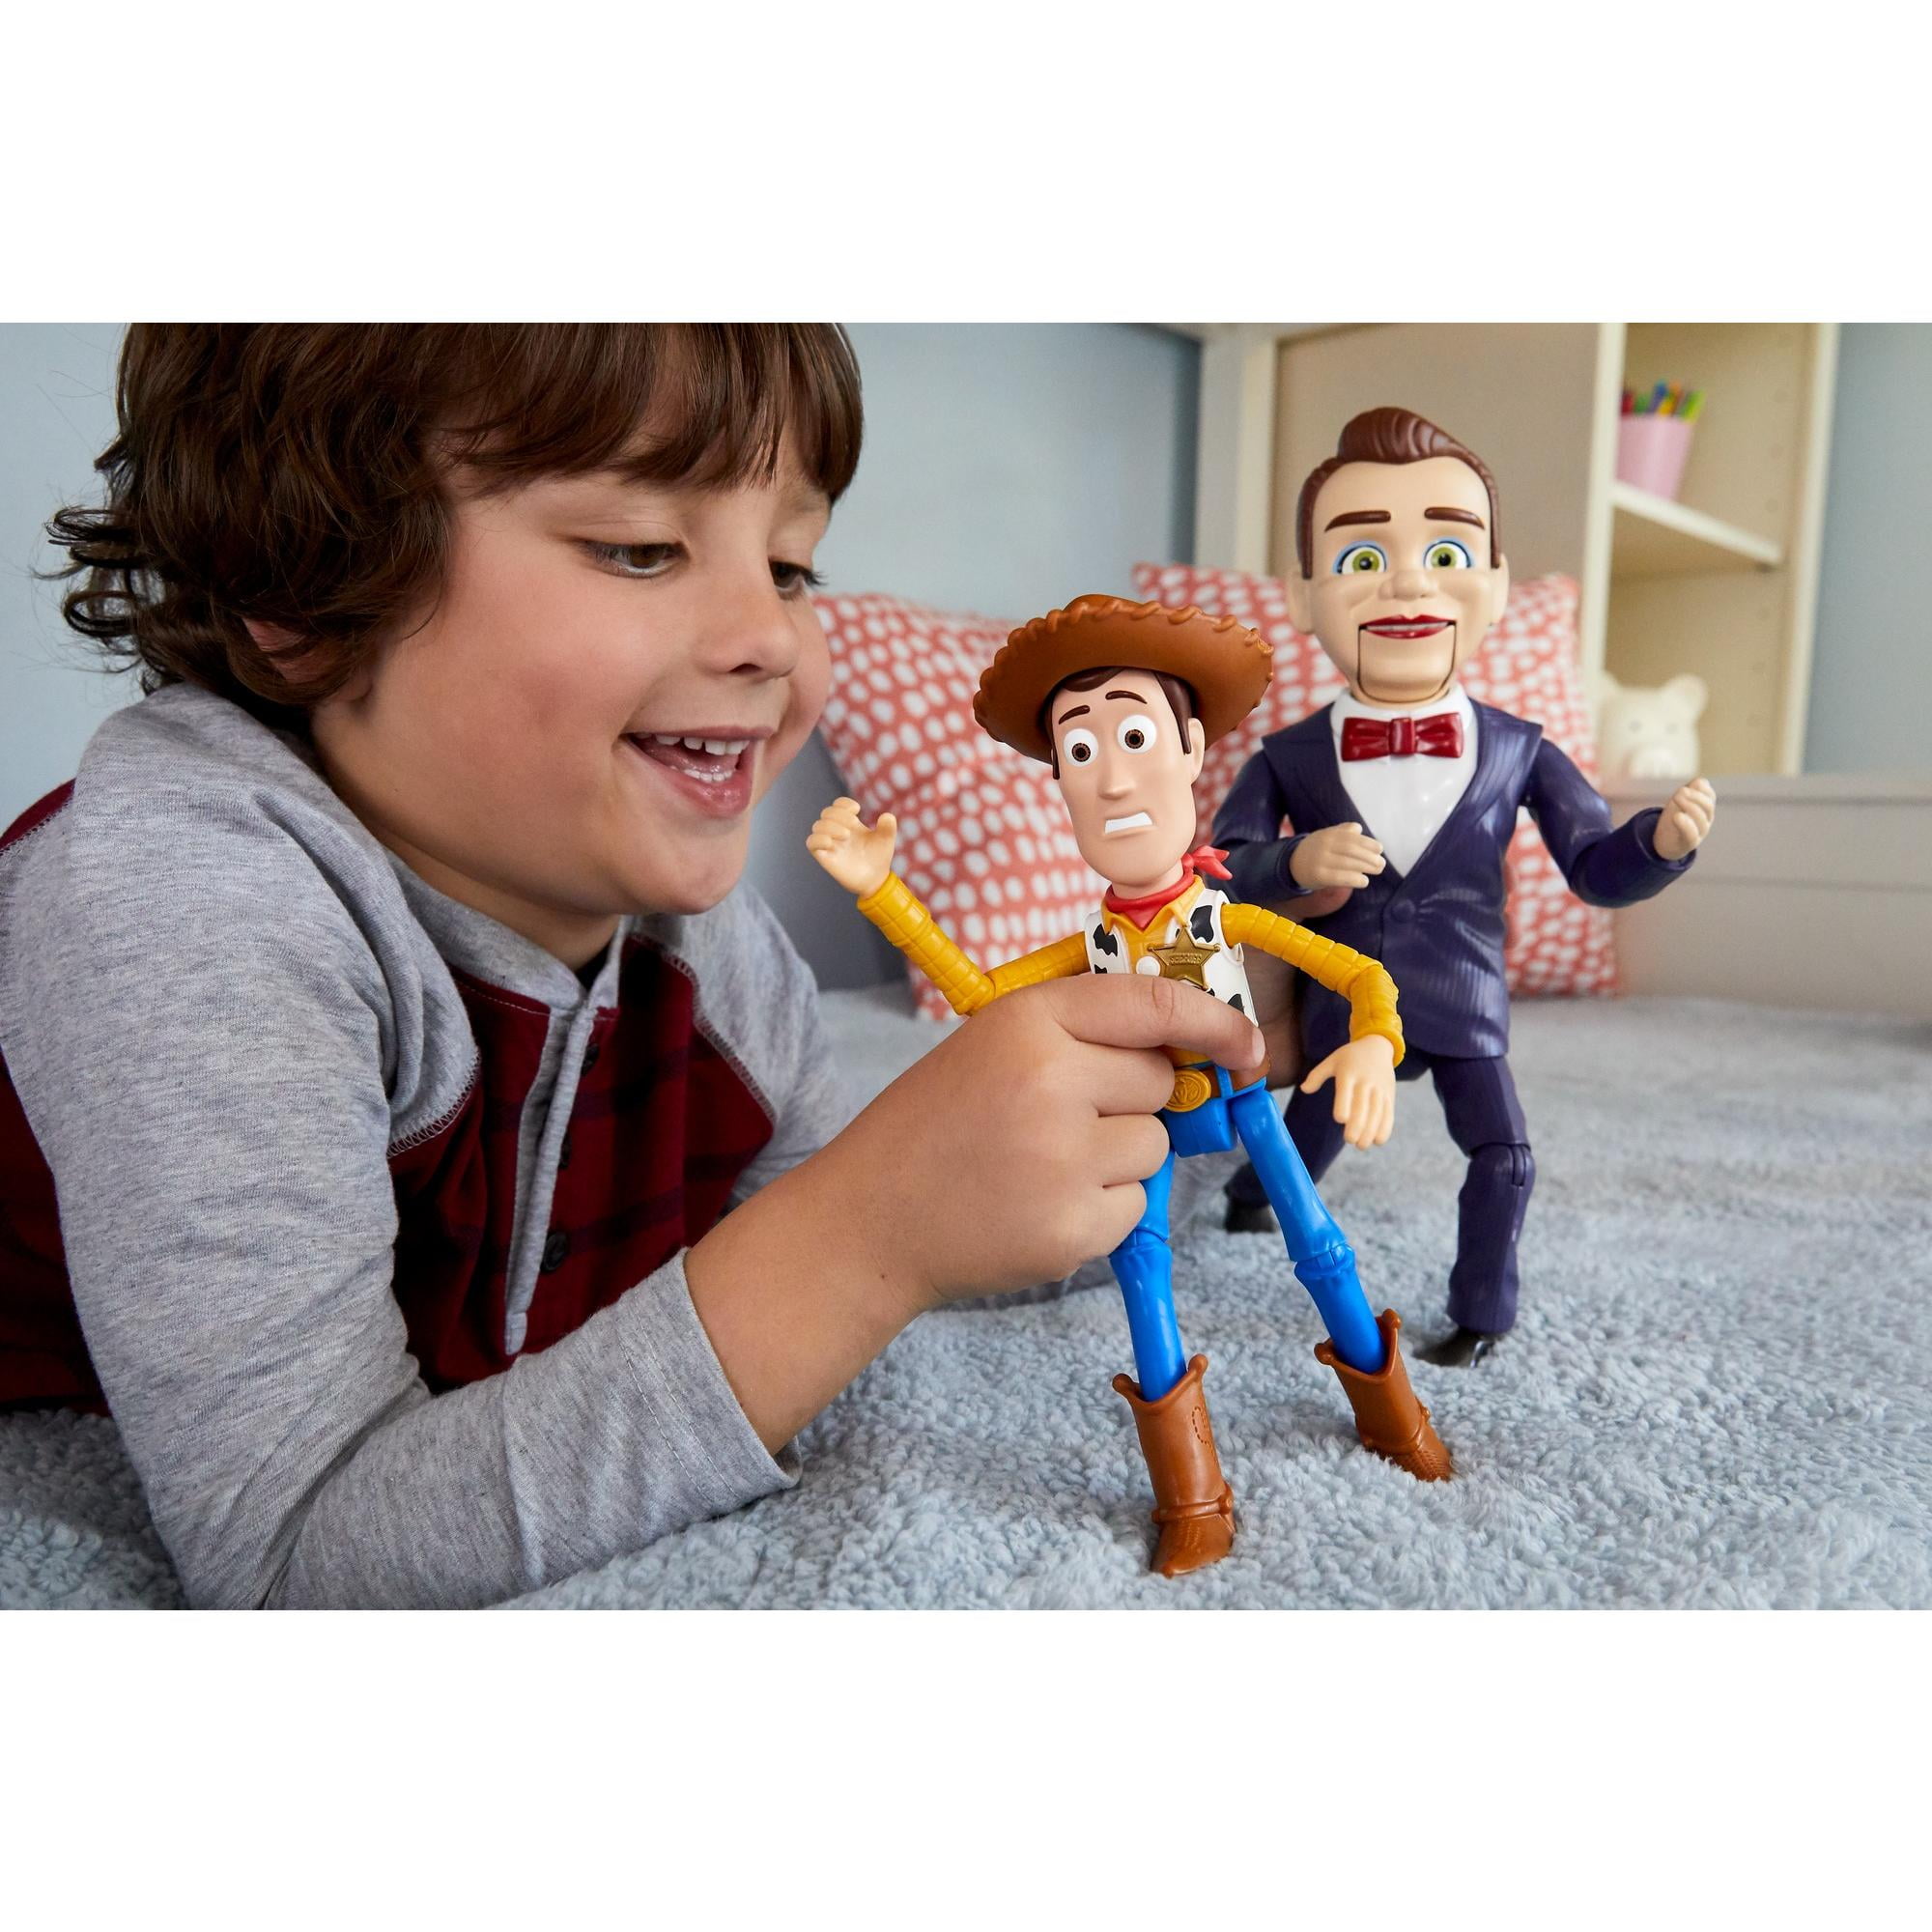 Disney/Pixar Toy Story Benson and Woody 2-Pack Figures.